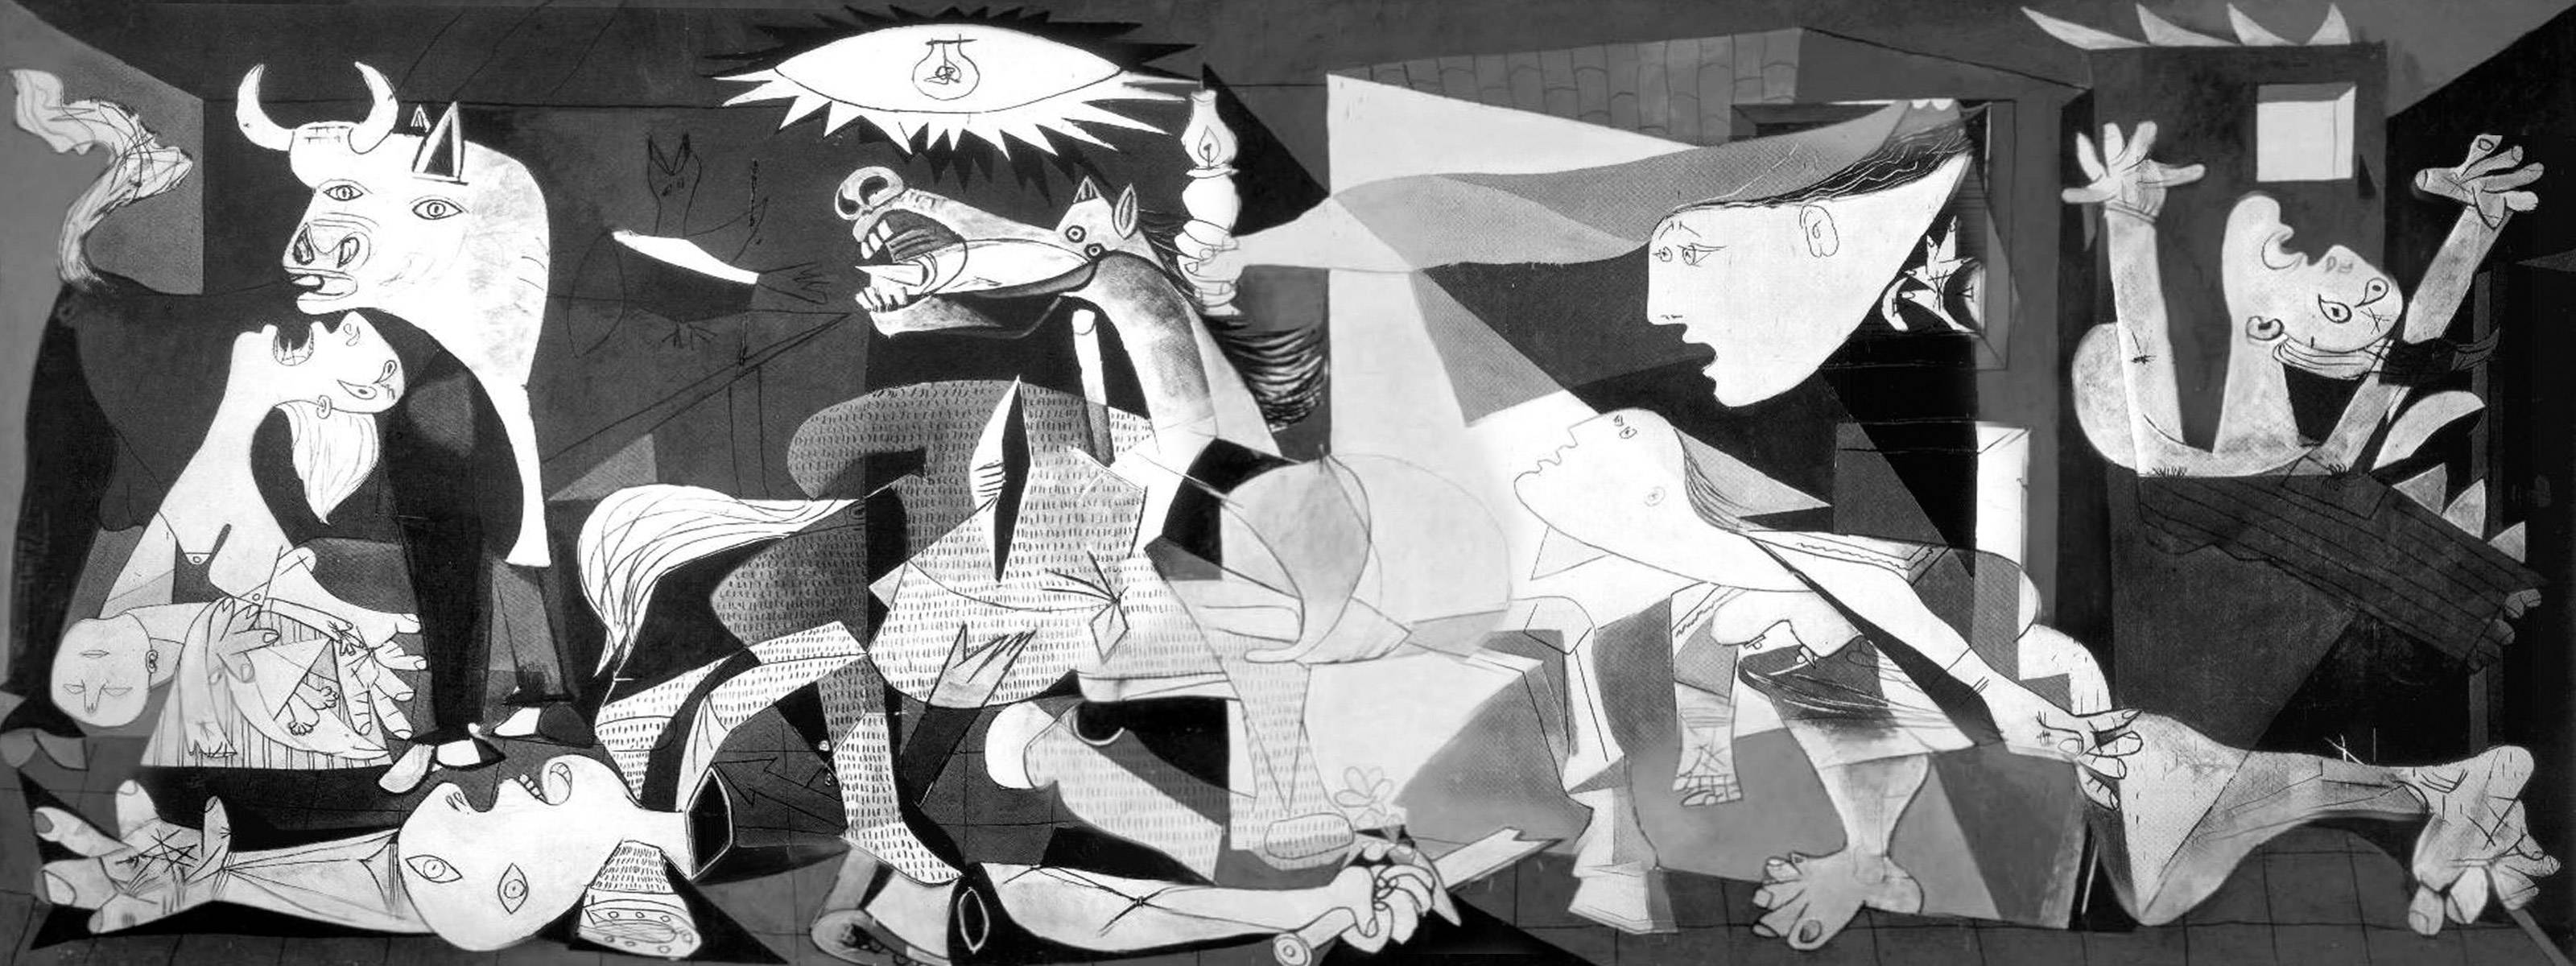 “Guernica”, Pablo Picasso, 1937